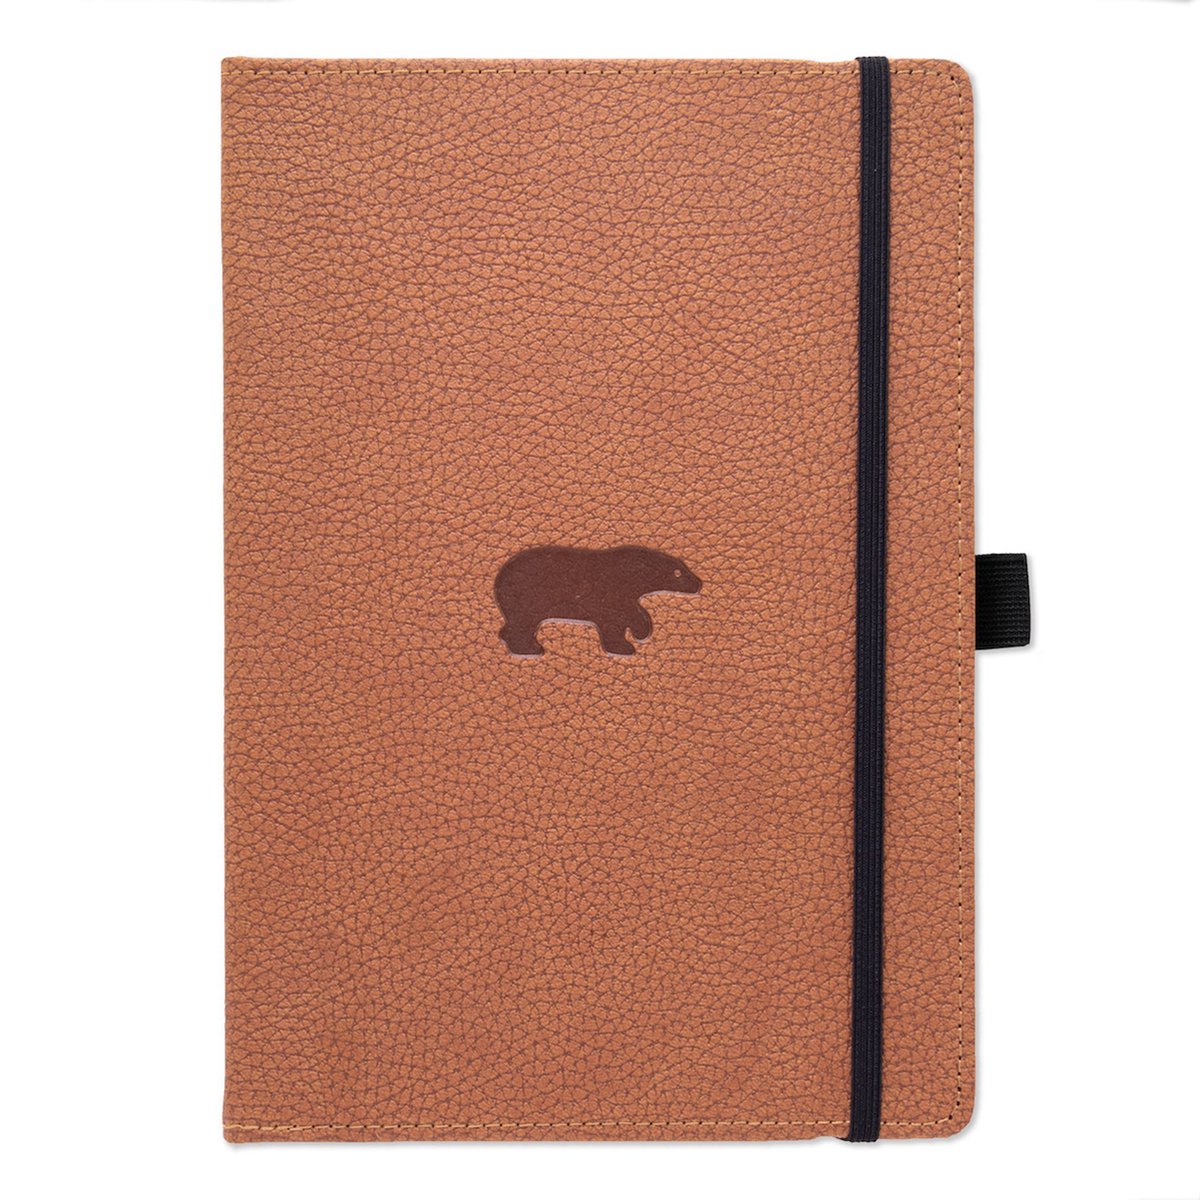 Dingbats A4+ Wildlife Brown Bear Notebook - Dotted